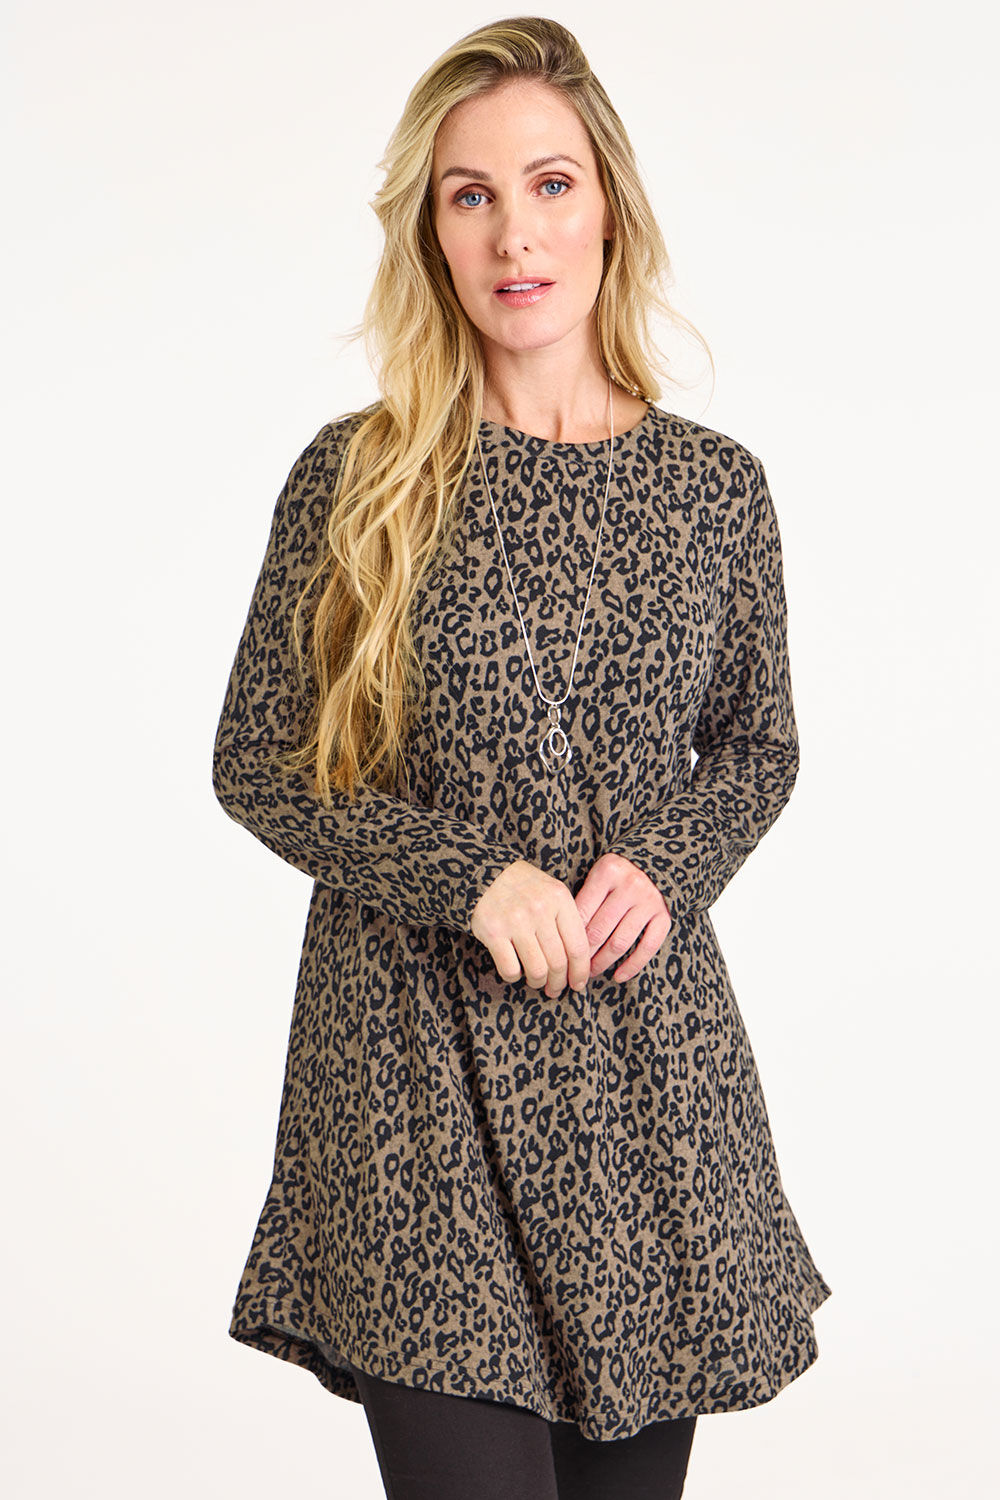 Bonmarche Women’s Brown and Black Animal Print Soft Touch Tunic Dress, Size: L